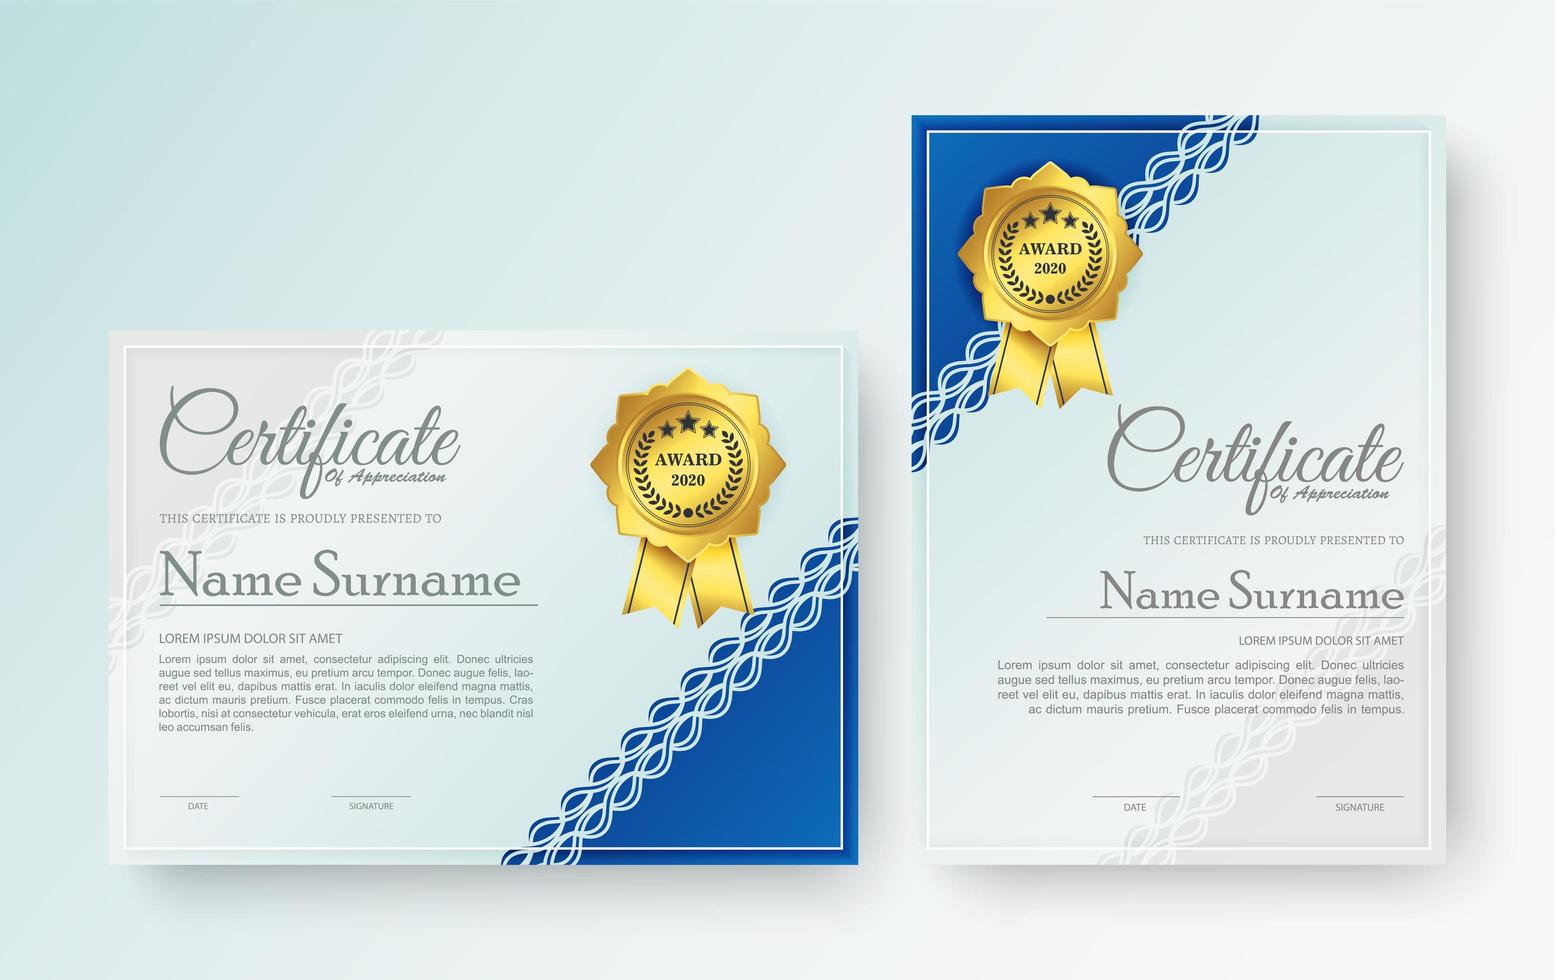 Certificate of elegance template in modern blue vector